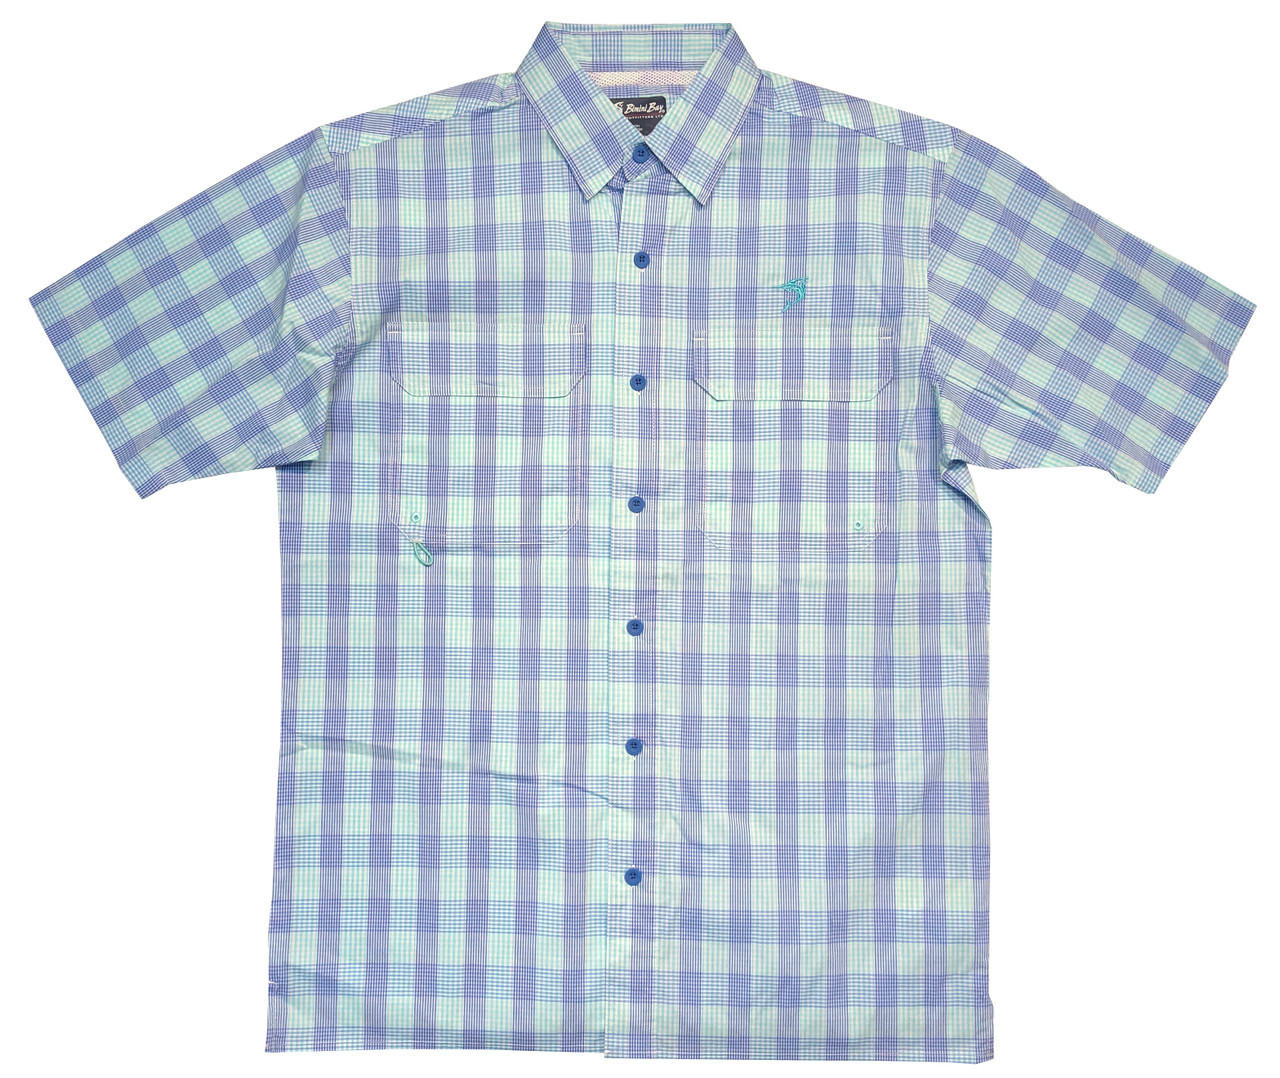 Bimini Bay Outfitters Pine Island Plaid Short Sleeve Shirt